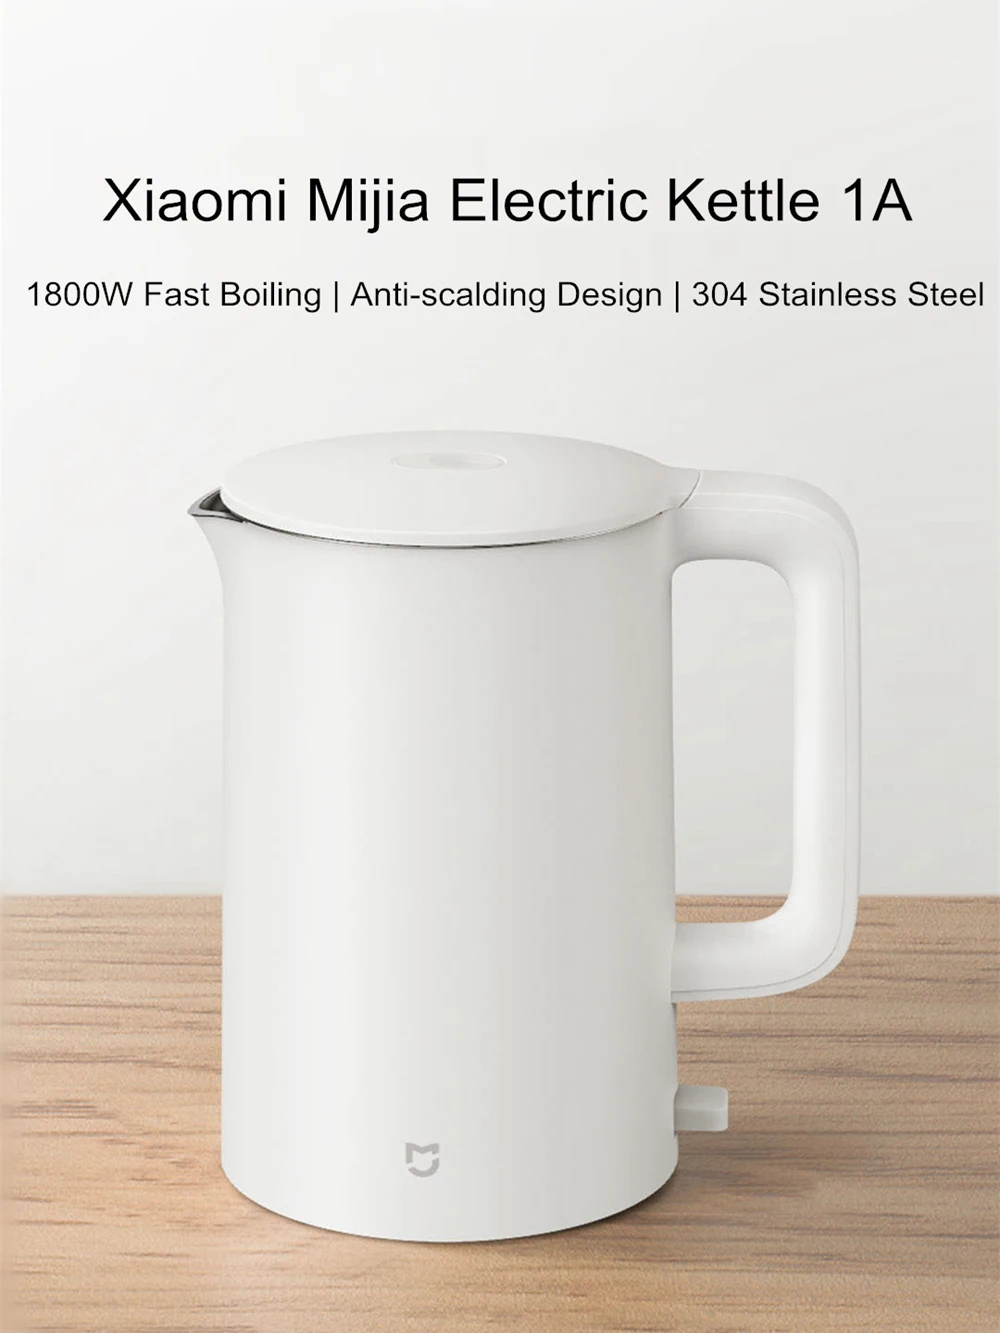 Xiaomi Mijia Electric Kettle 1a